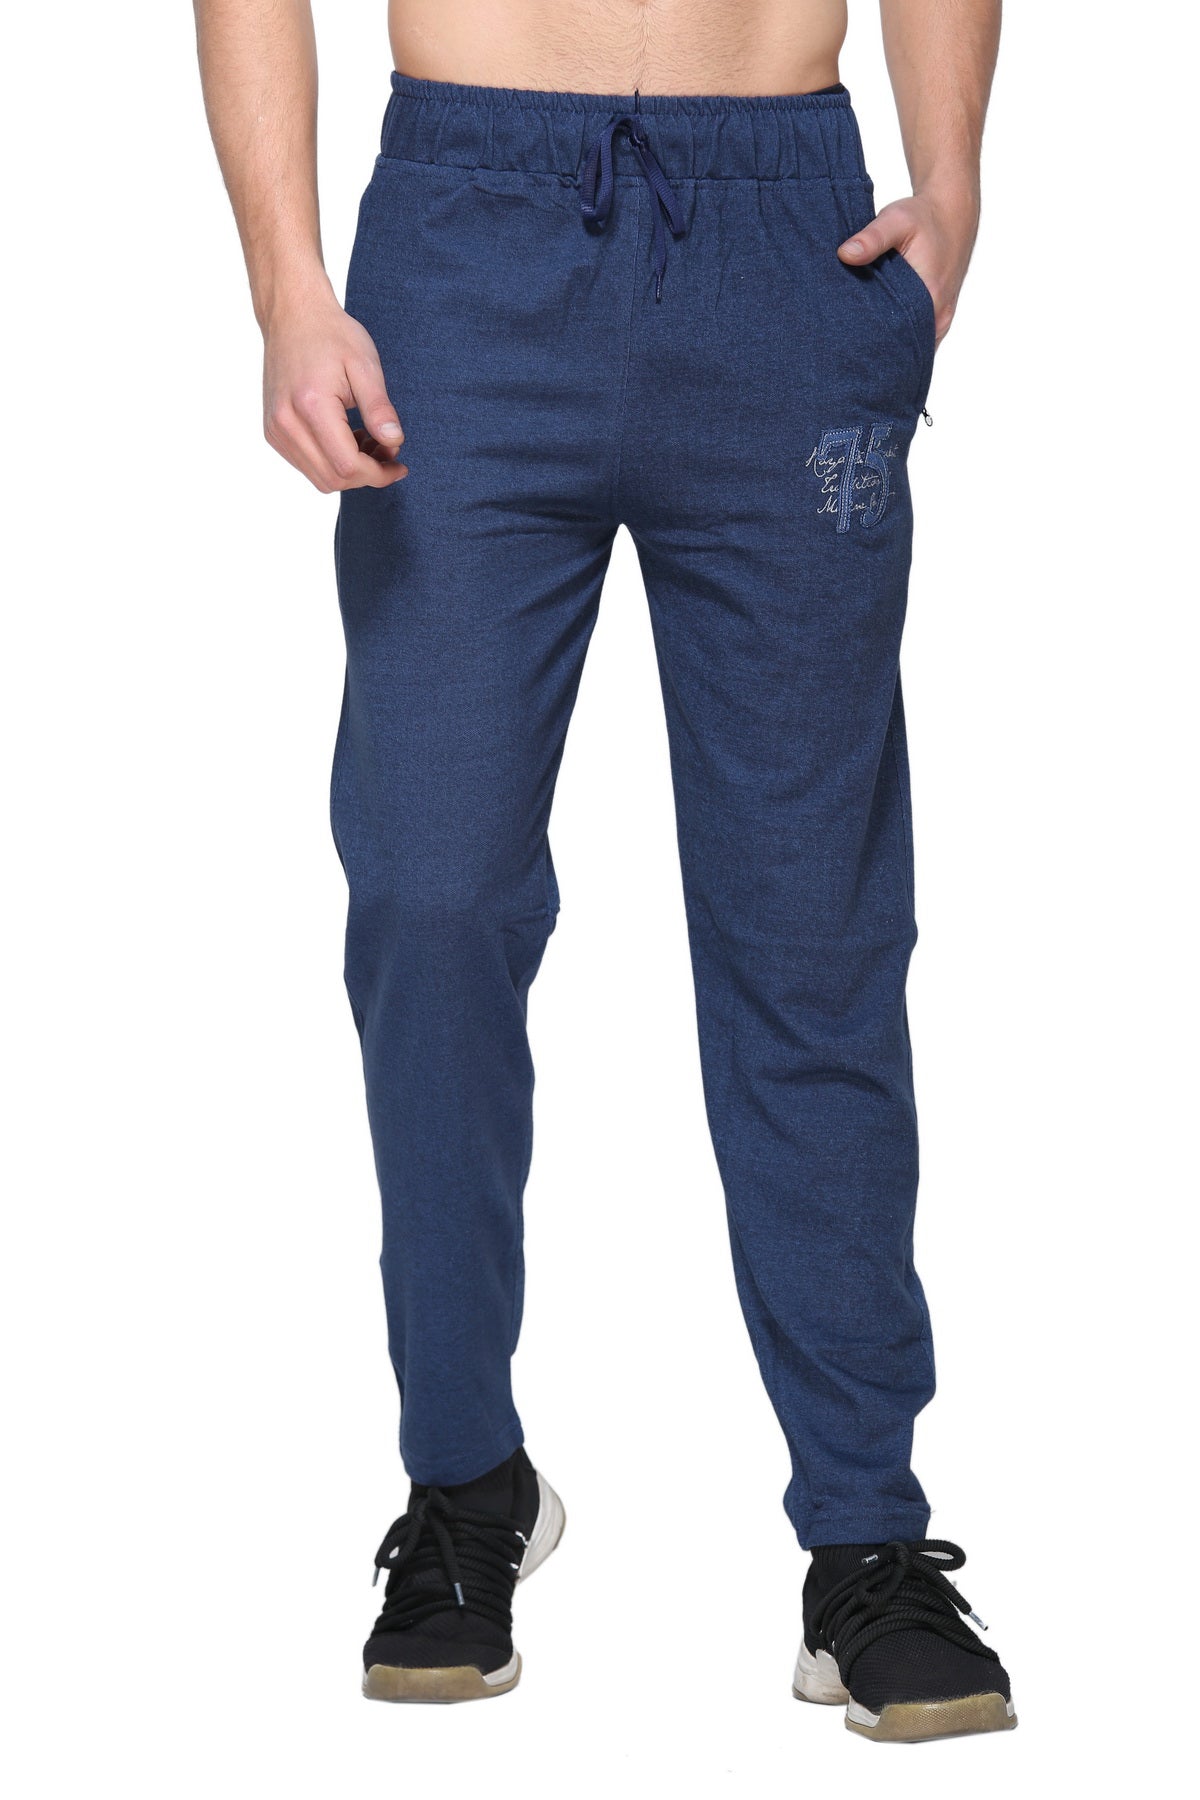 Levis Premium Altered Denim Track Pants Mens Jeans Buzzer Beater 4-Way  Stretch | eBay